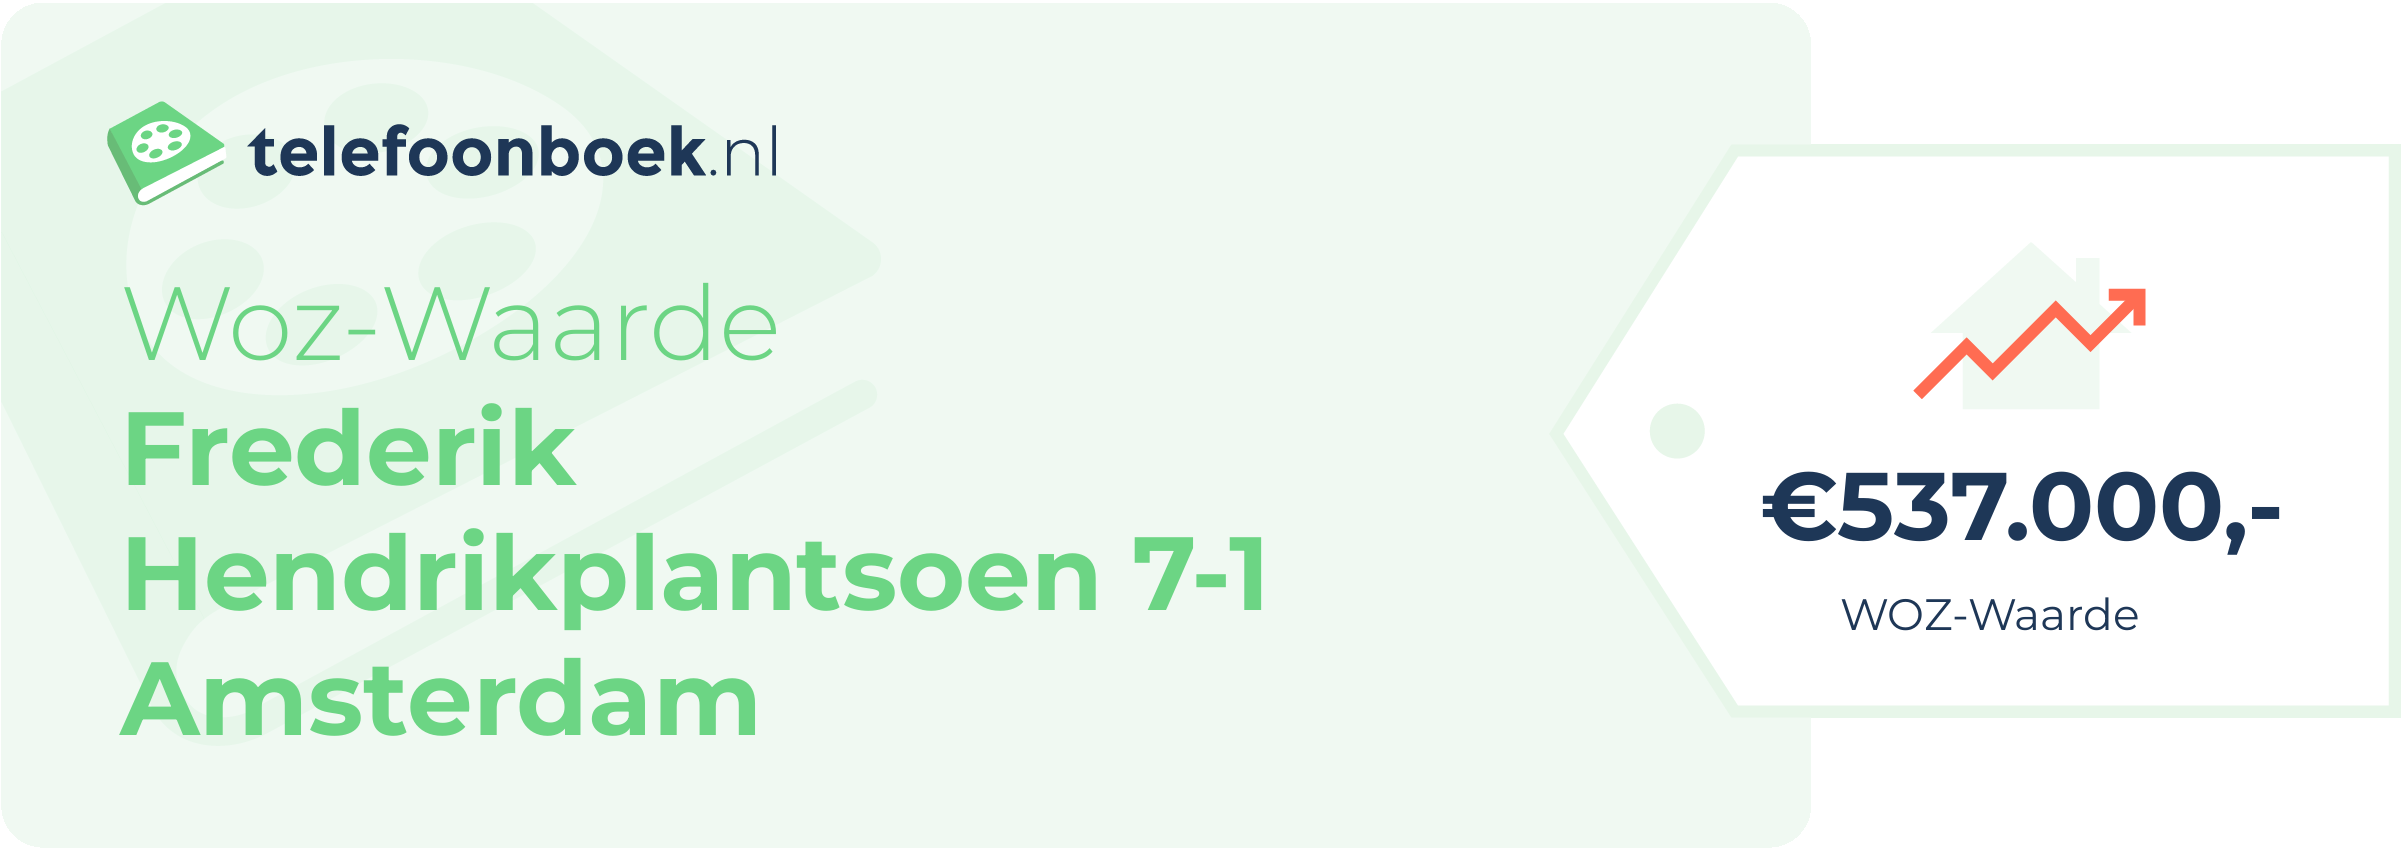 WOZ-waarde Frederik Hendrikplantsoen 7-1 Amsterdam